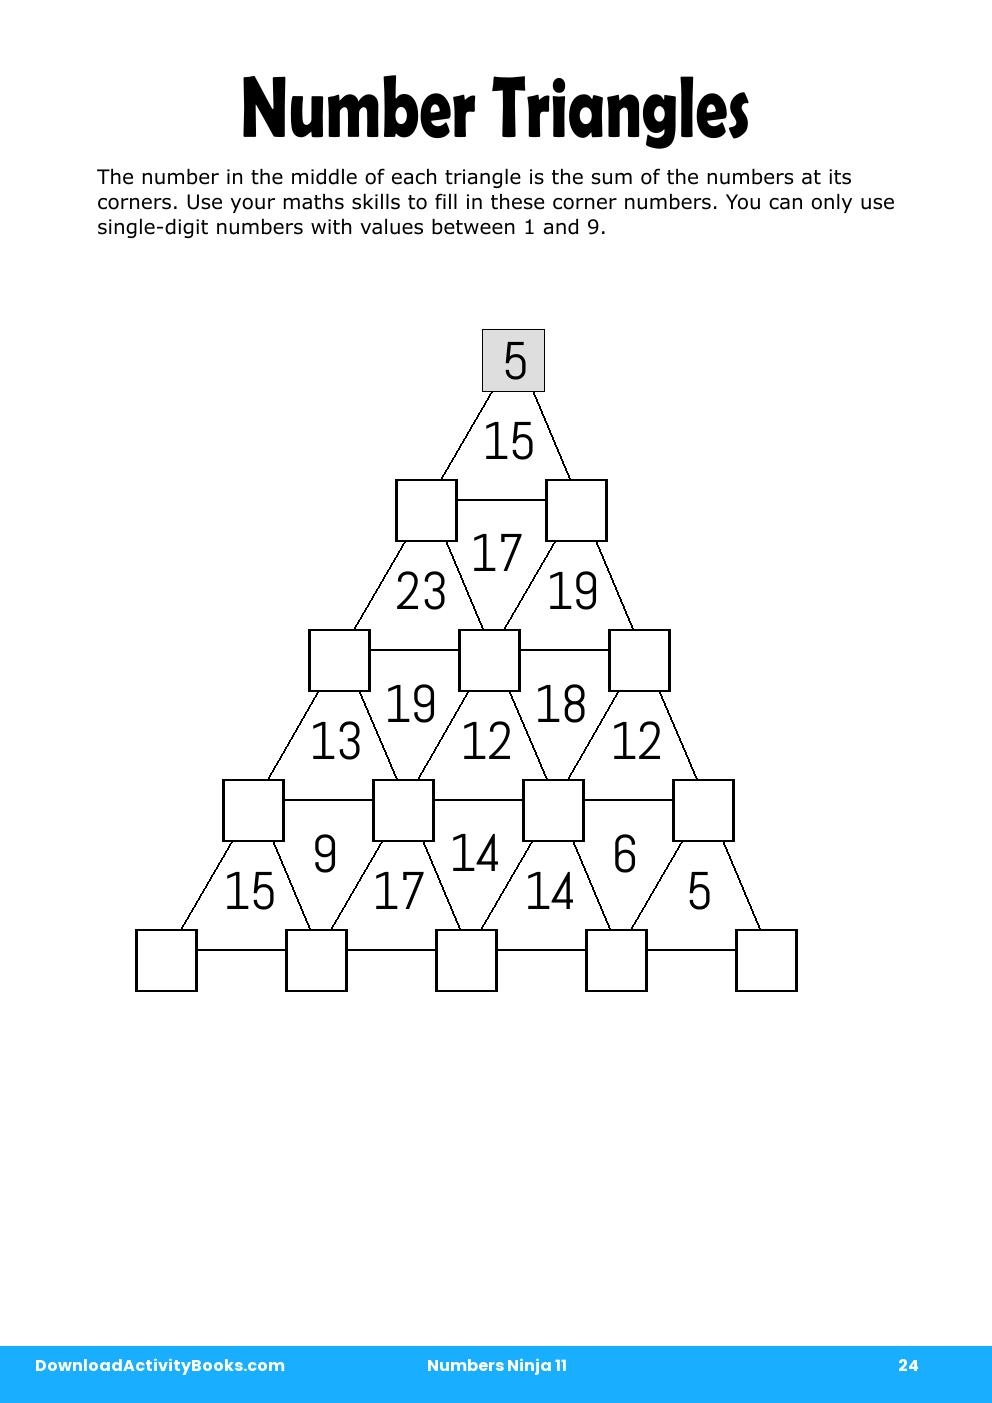 Number Triangles in Numbers Ninja 11